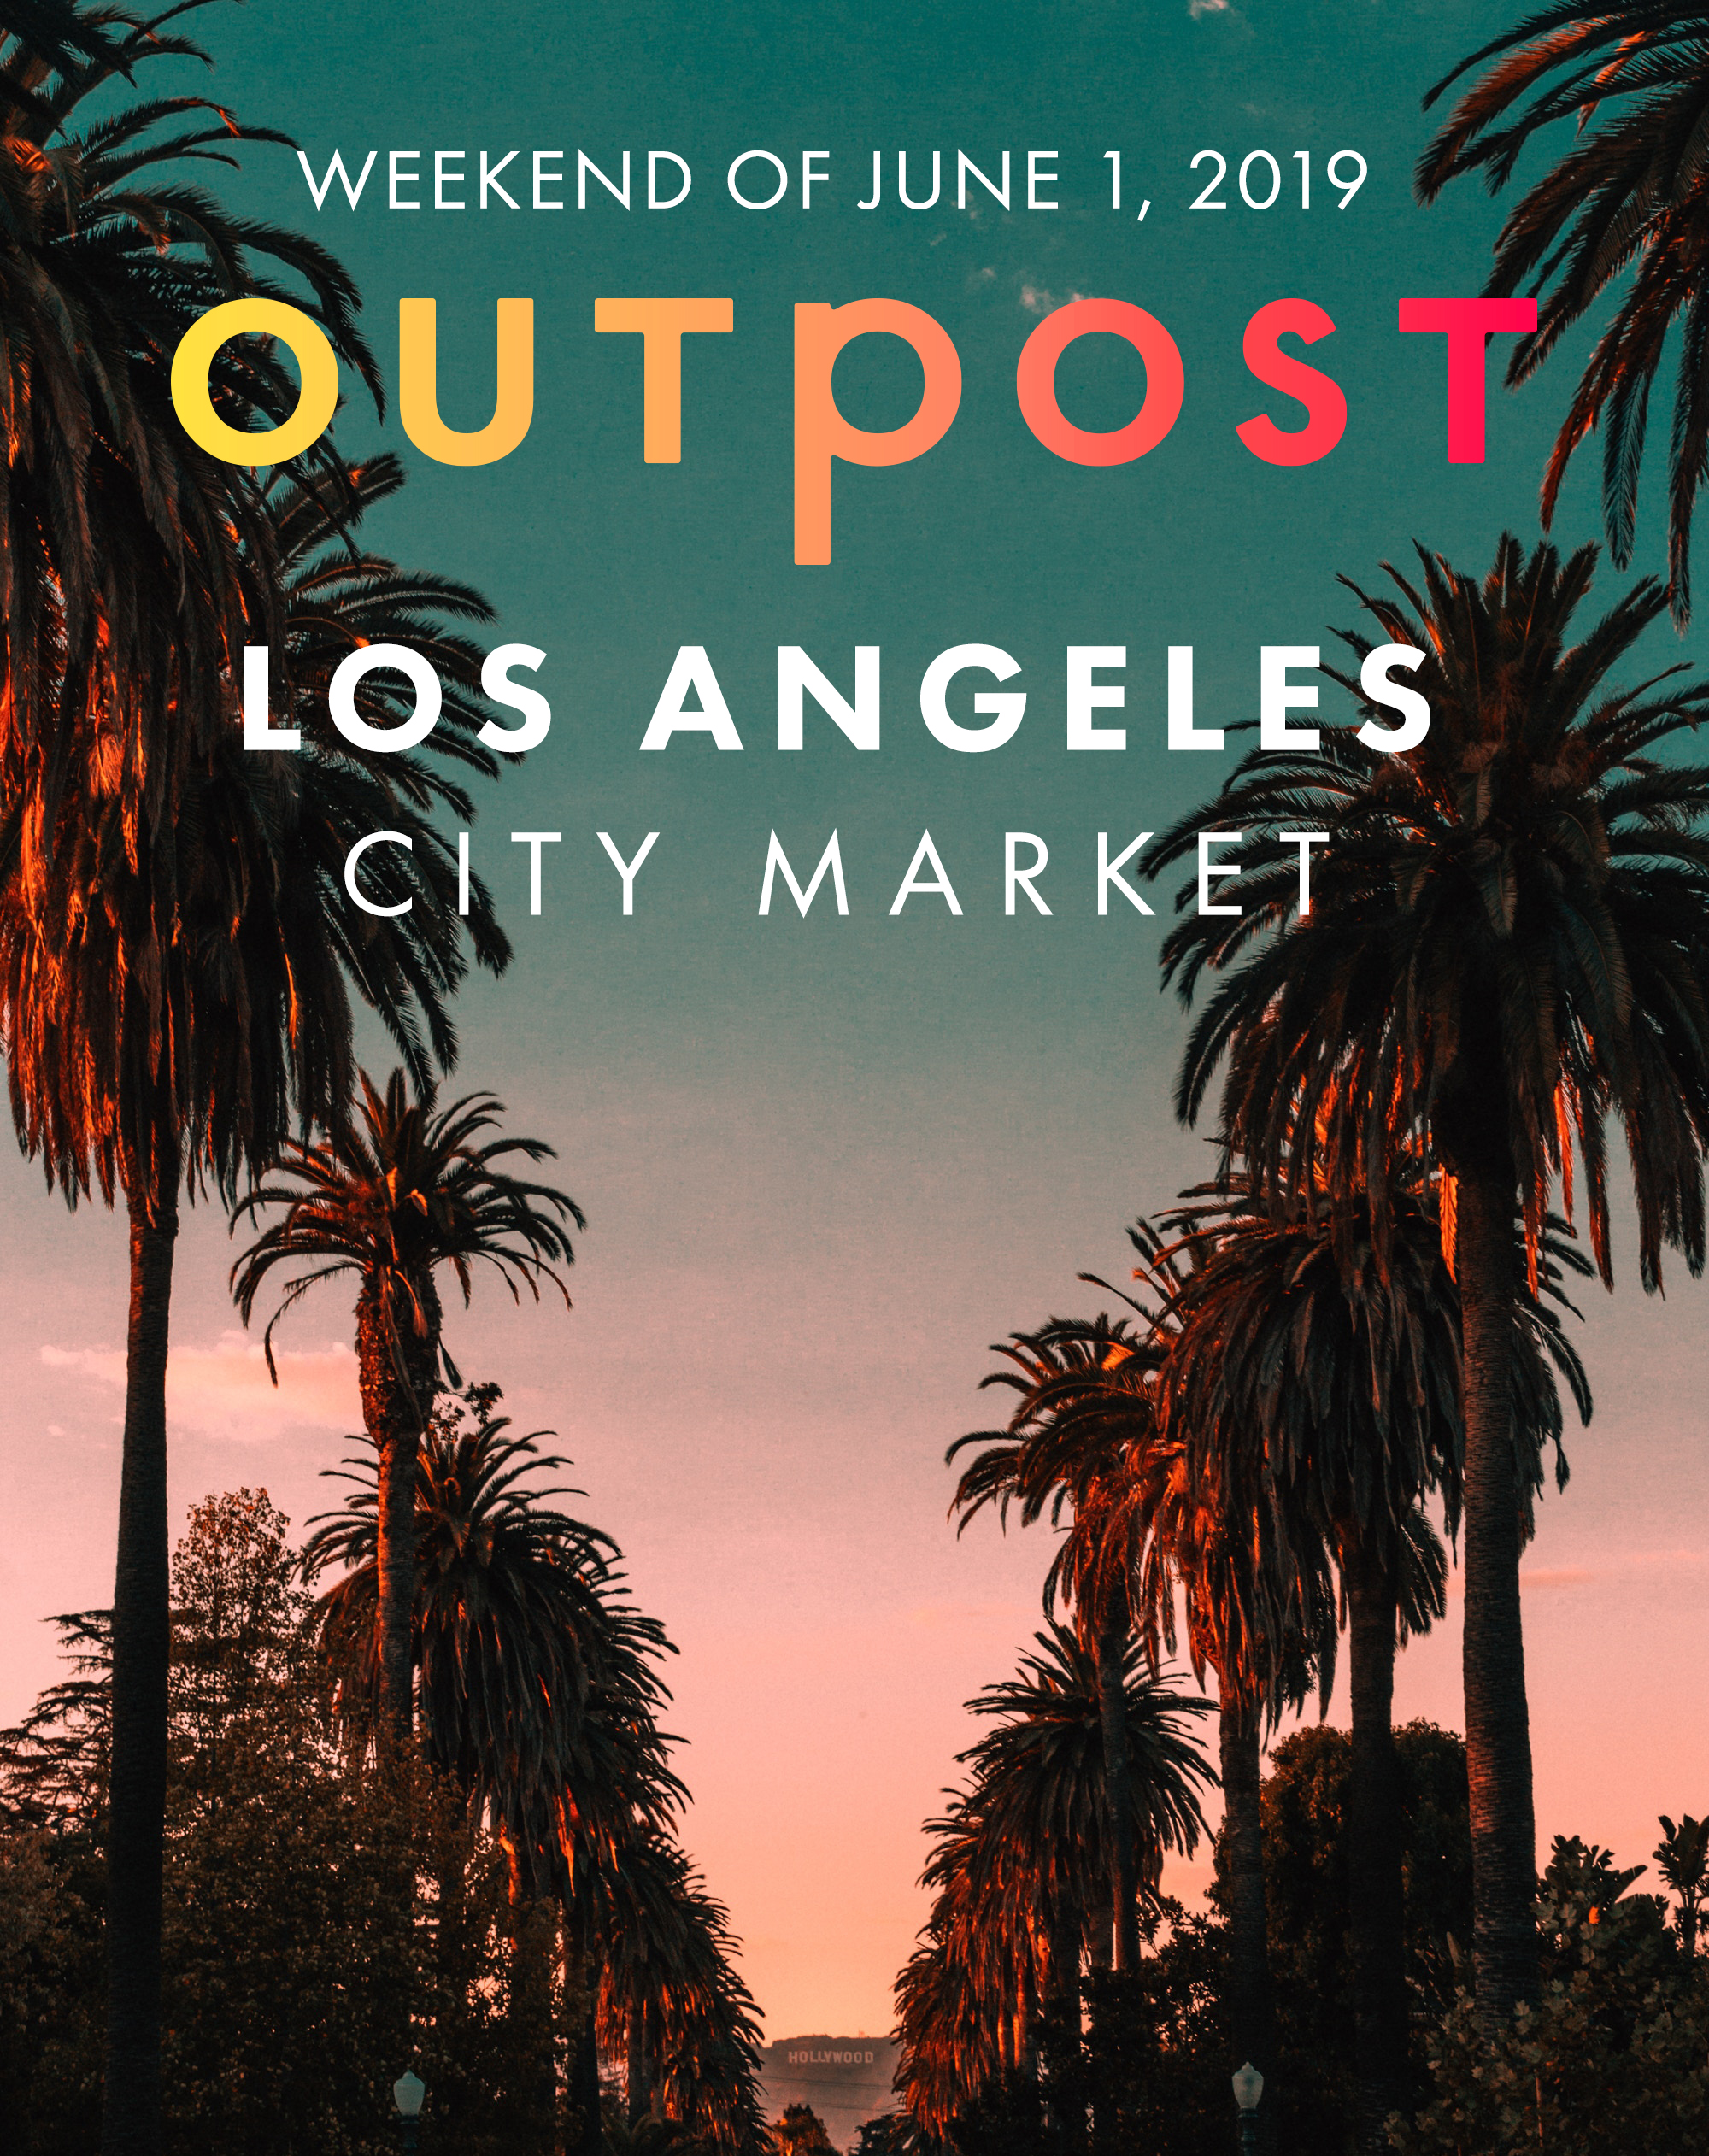 2019 Outpost LA City Market - Weekend of June 1st!